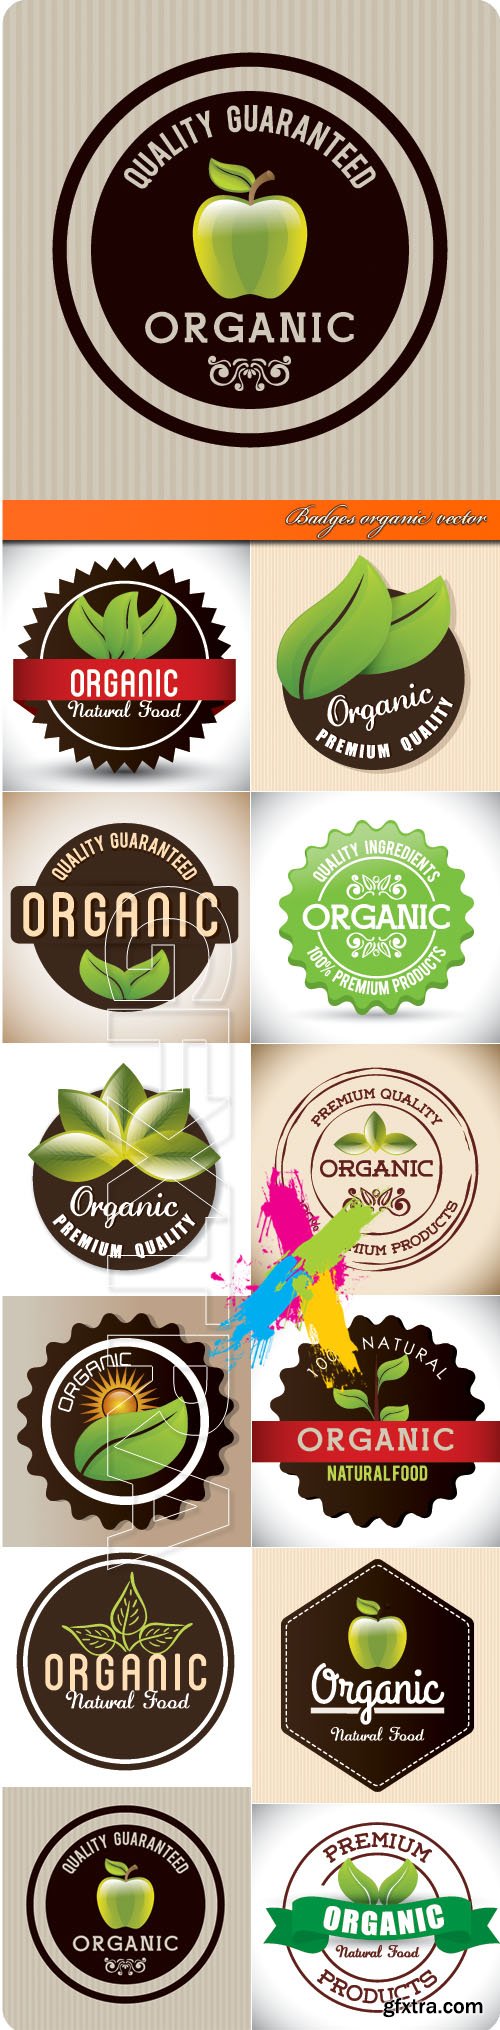 Badges organic vector